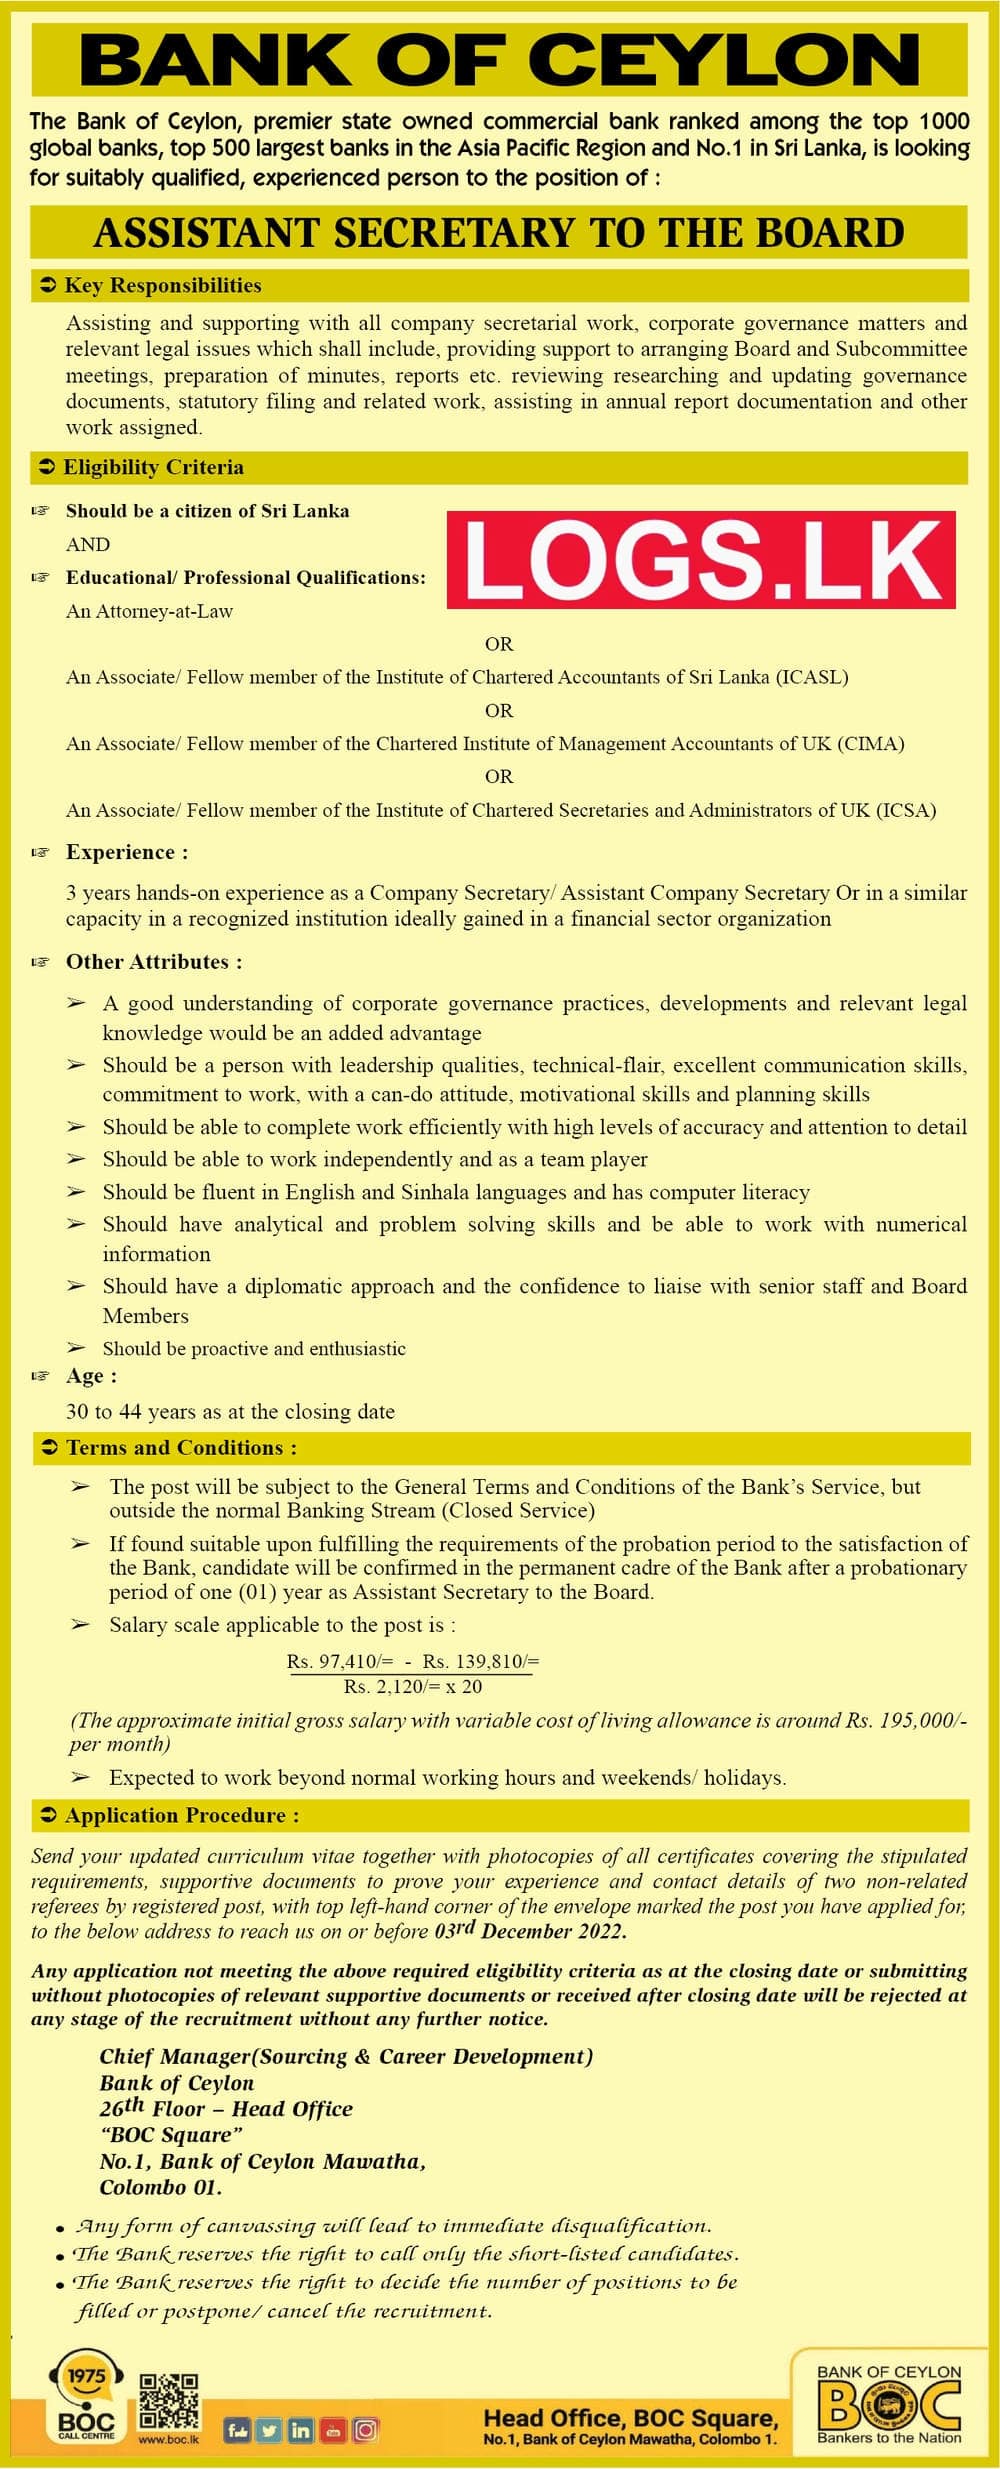 Assistant Secretary to the Board Job Vacancy in BOC Bank Bank of Ceylon Jobs Vacancies Details, Application Form Download